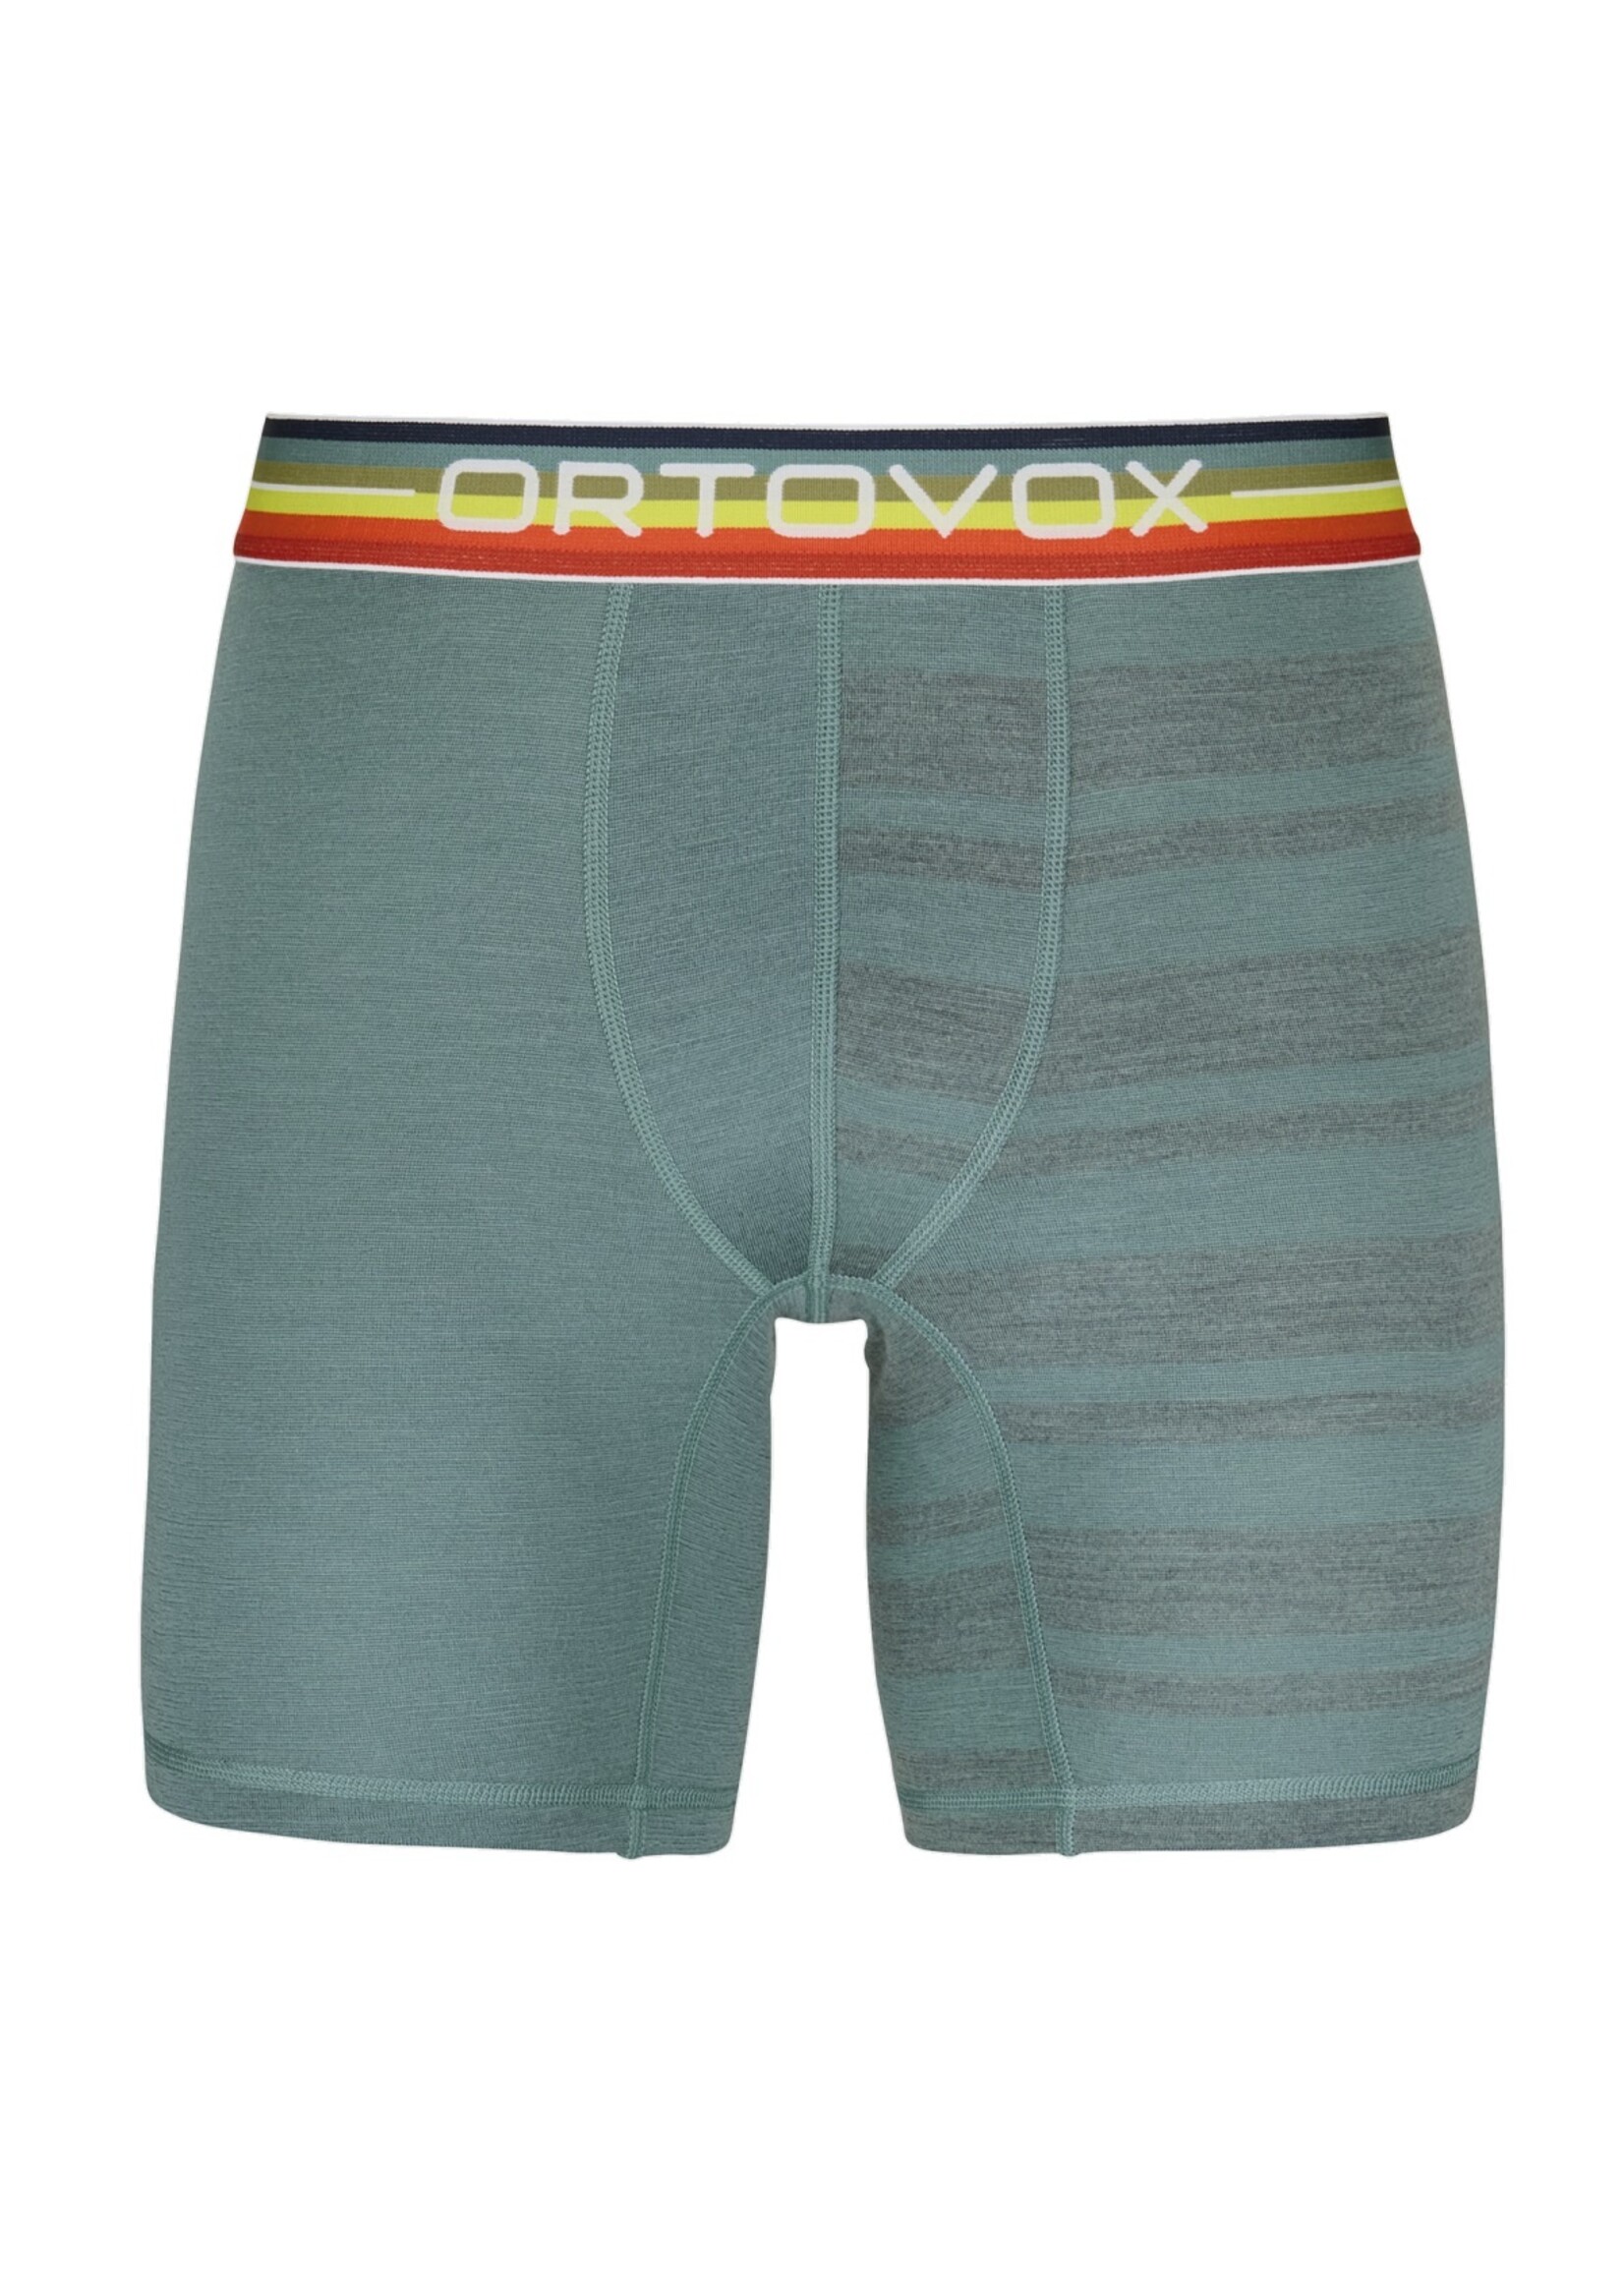 Ortovox Ortovox 185 Rock'N'Wool Boxer - Men